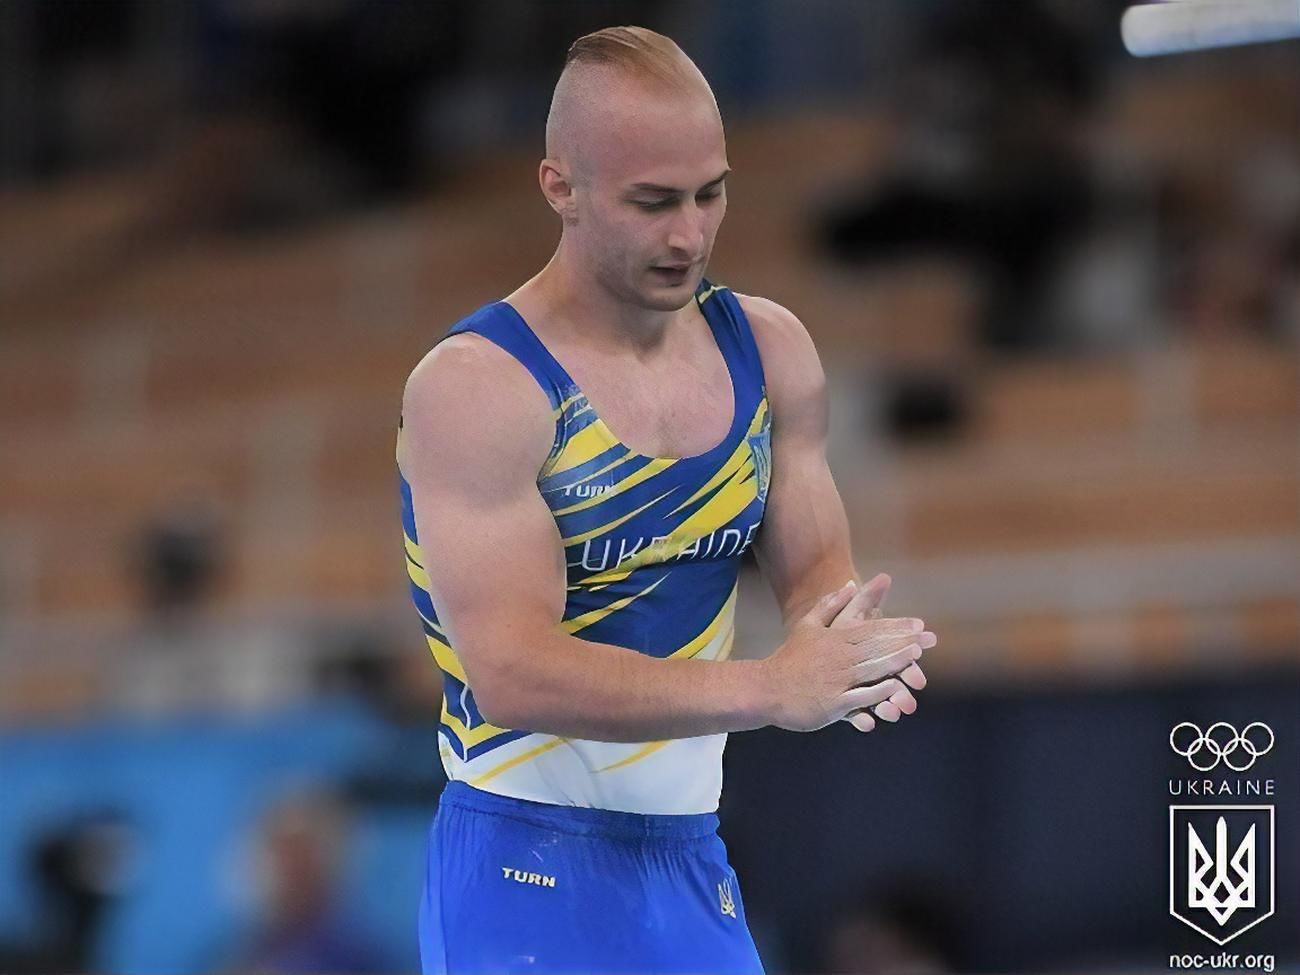 Украина установила антирекорд Олимпиад: наши гимнасты остались без наград на ОИ-2020 в Токио